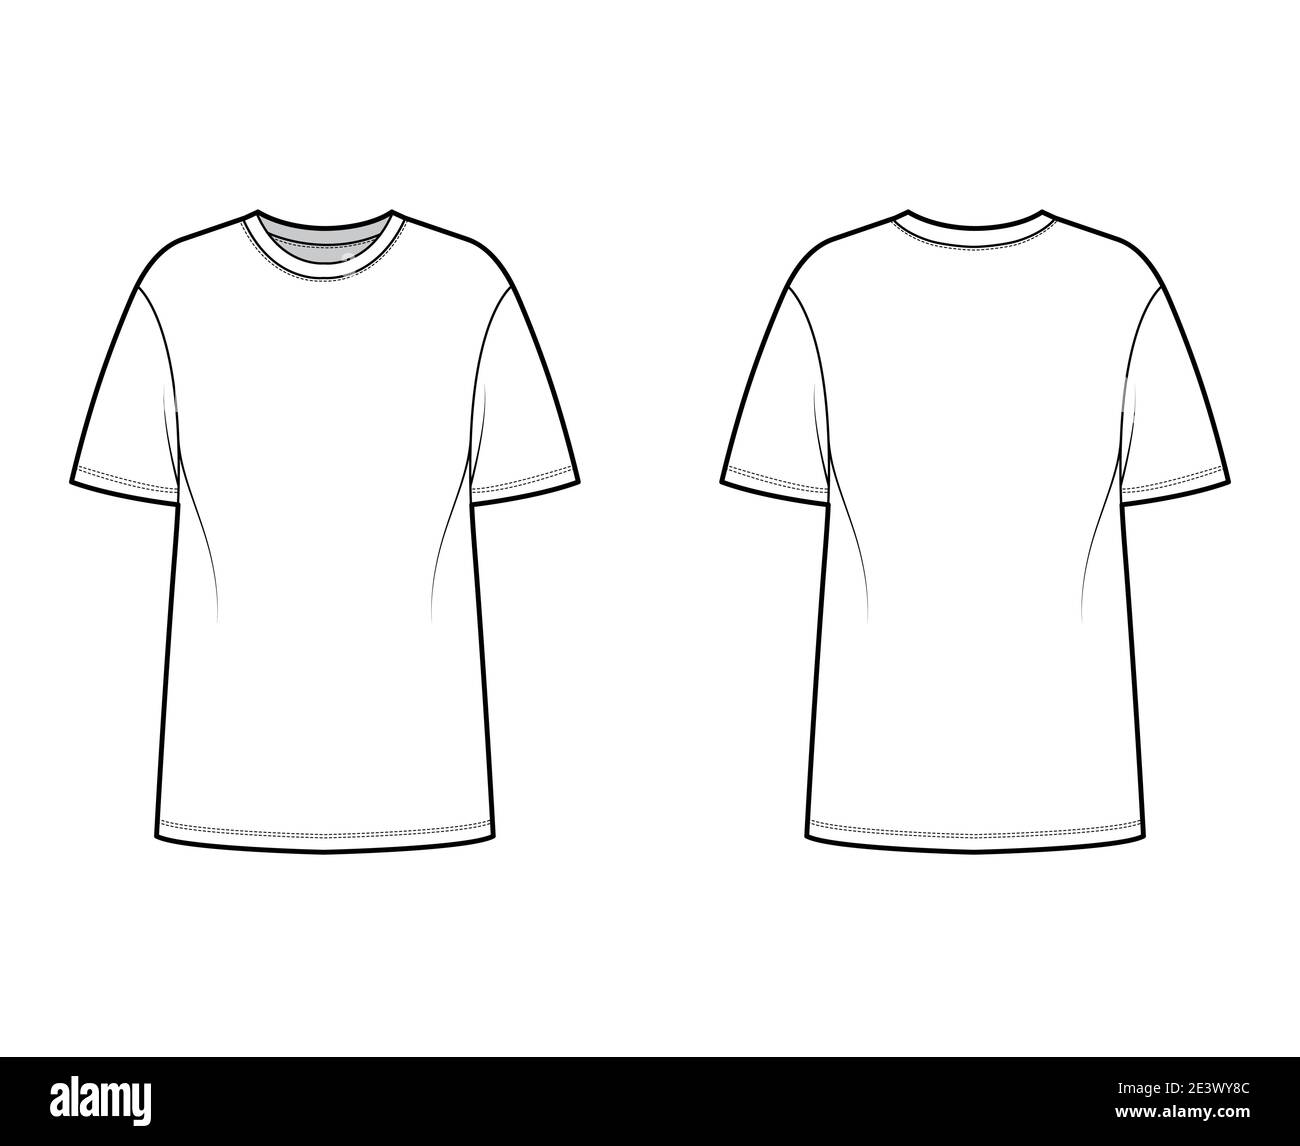 T-shirt oversized technical fashion illustration with short sleeves ...